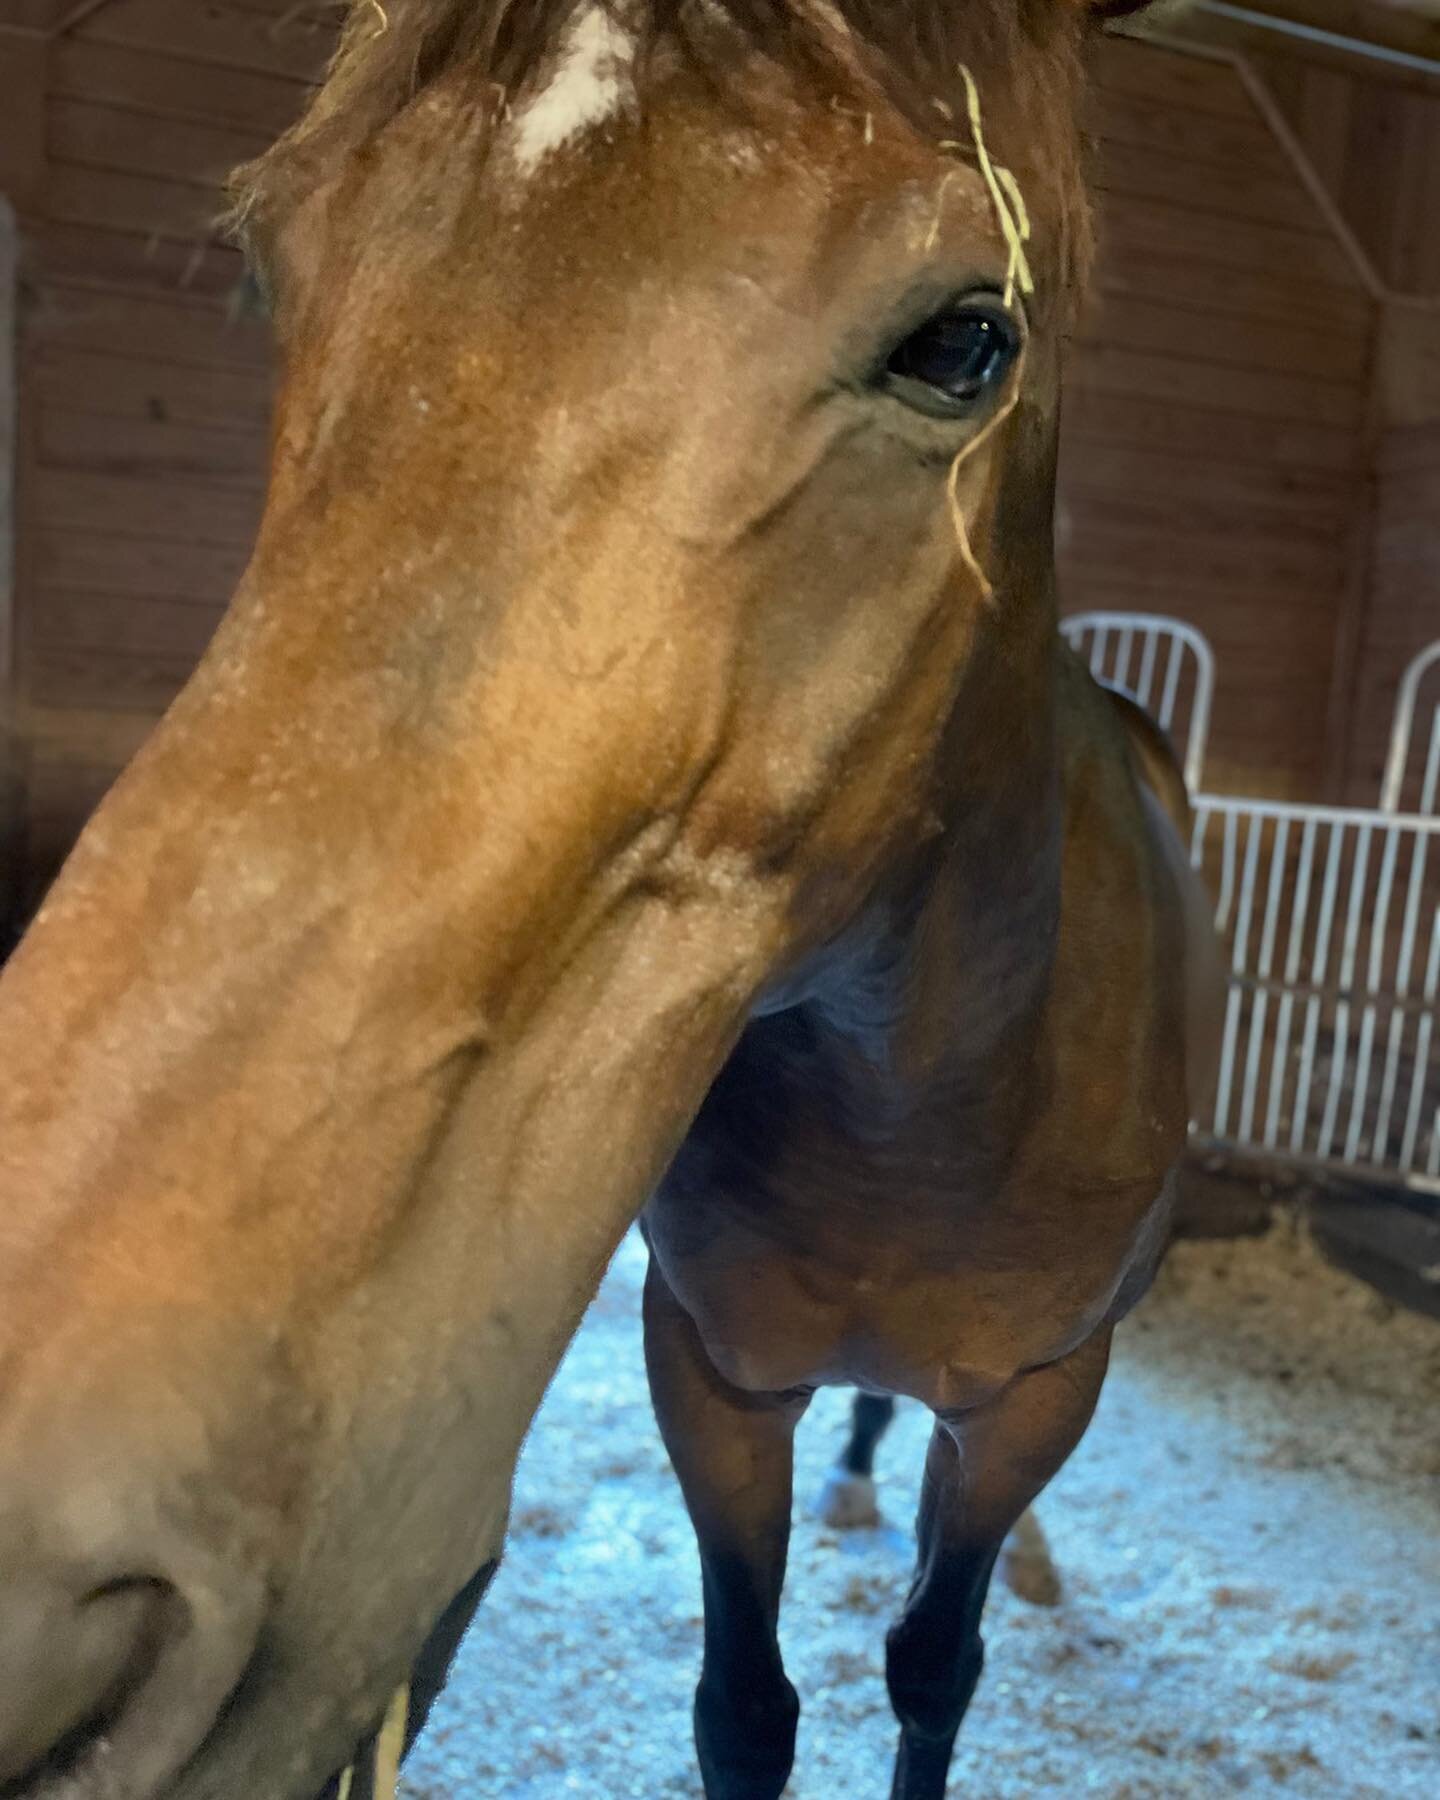 Elvis-a portraiture study 😂🐎Be honest- have you seen a more handsome horse?! 
⠀⠀⠀⠀⠀⠀⠀⠀⠀
#equinetherapy #horses #horsetherapy #dmvevents #exploredmv #dmvnetwork #dmv #dmvcreatives #vaevents #washingtondc #dc #dctherapist #dcfit #dclocal #dcmoms #dce